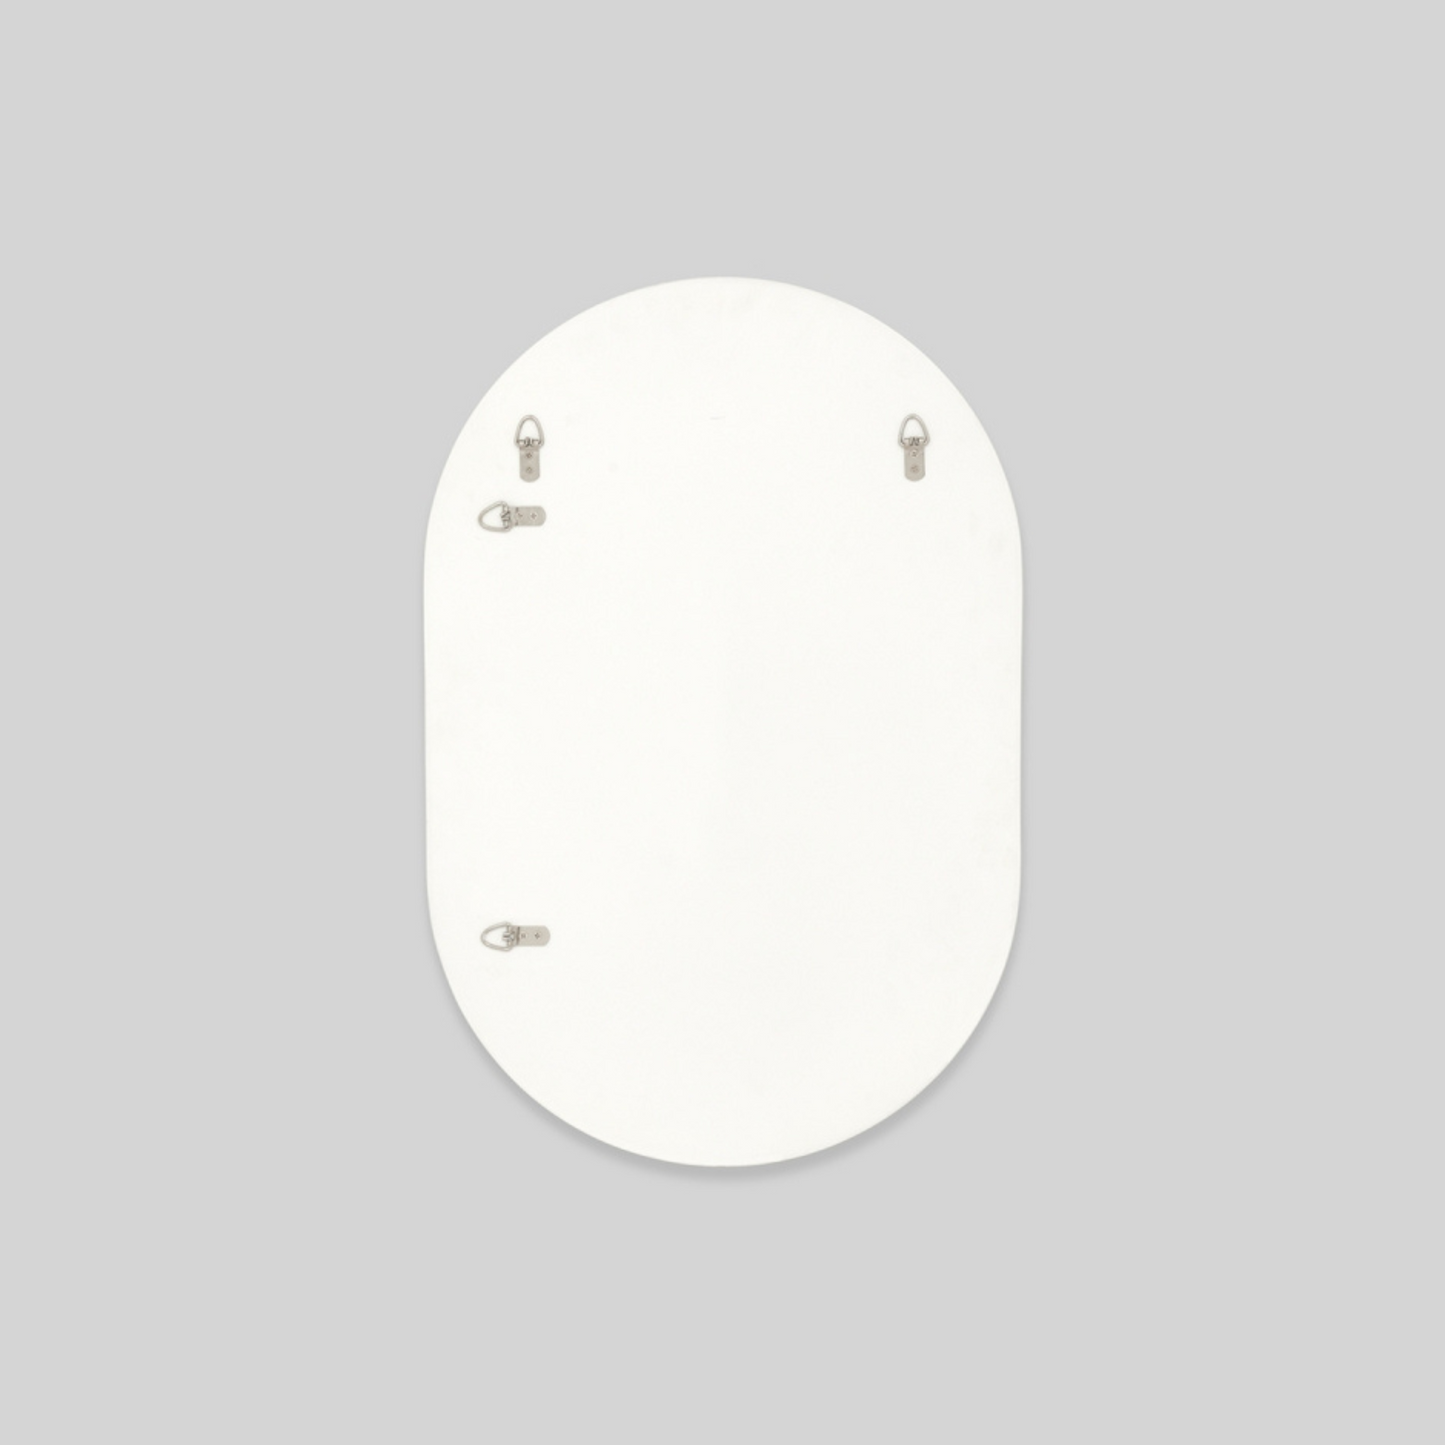 Bjorn Oval Mirror - White 65cm x 100cm